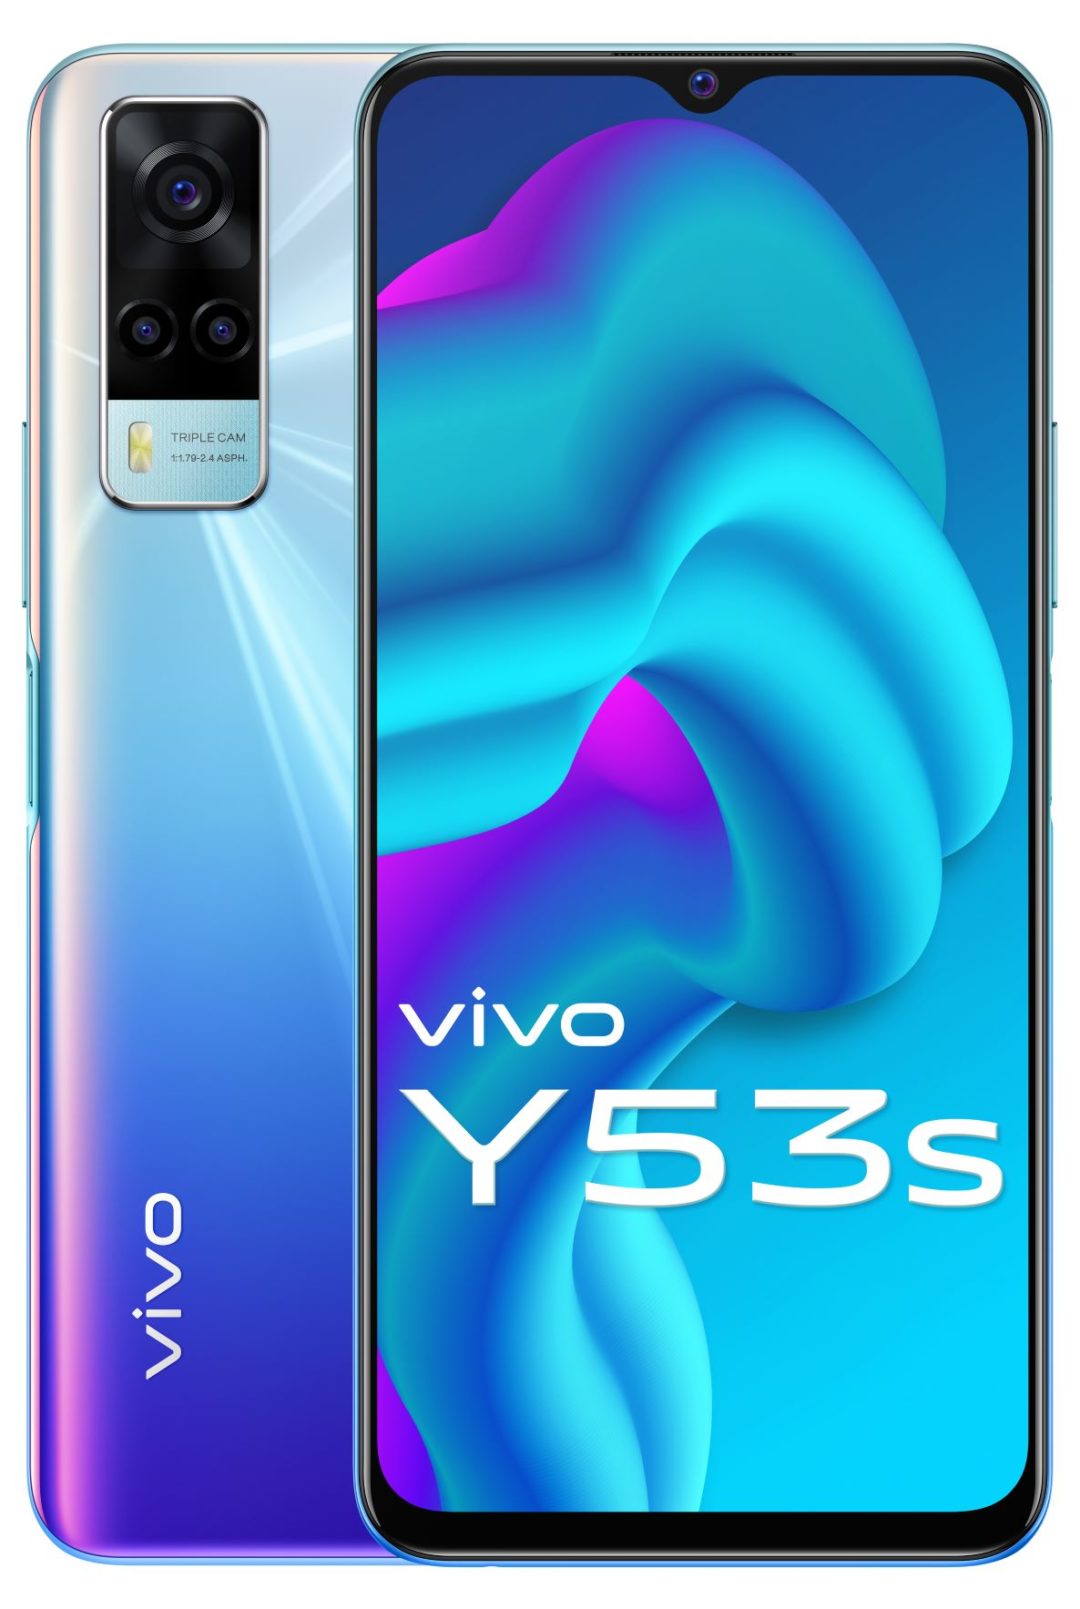 Vivo launches Y53s